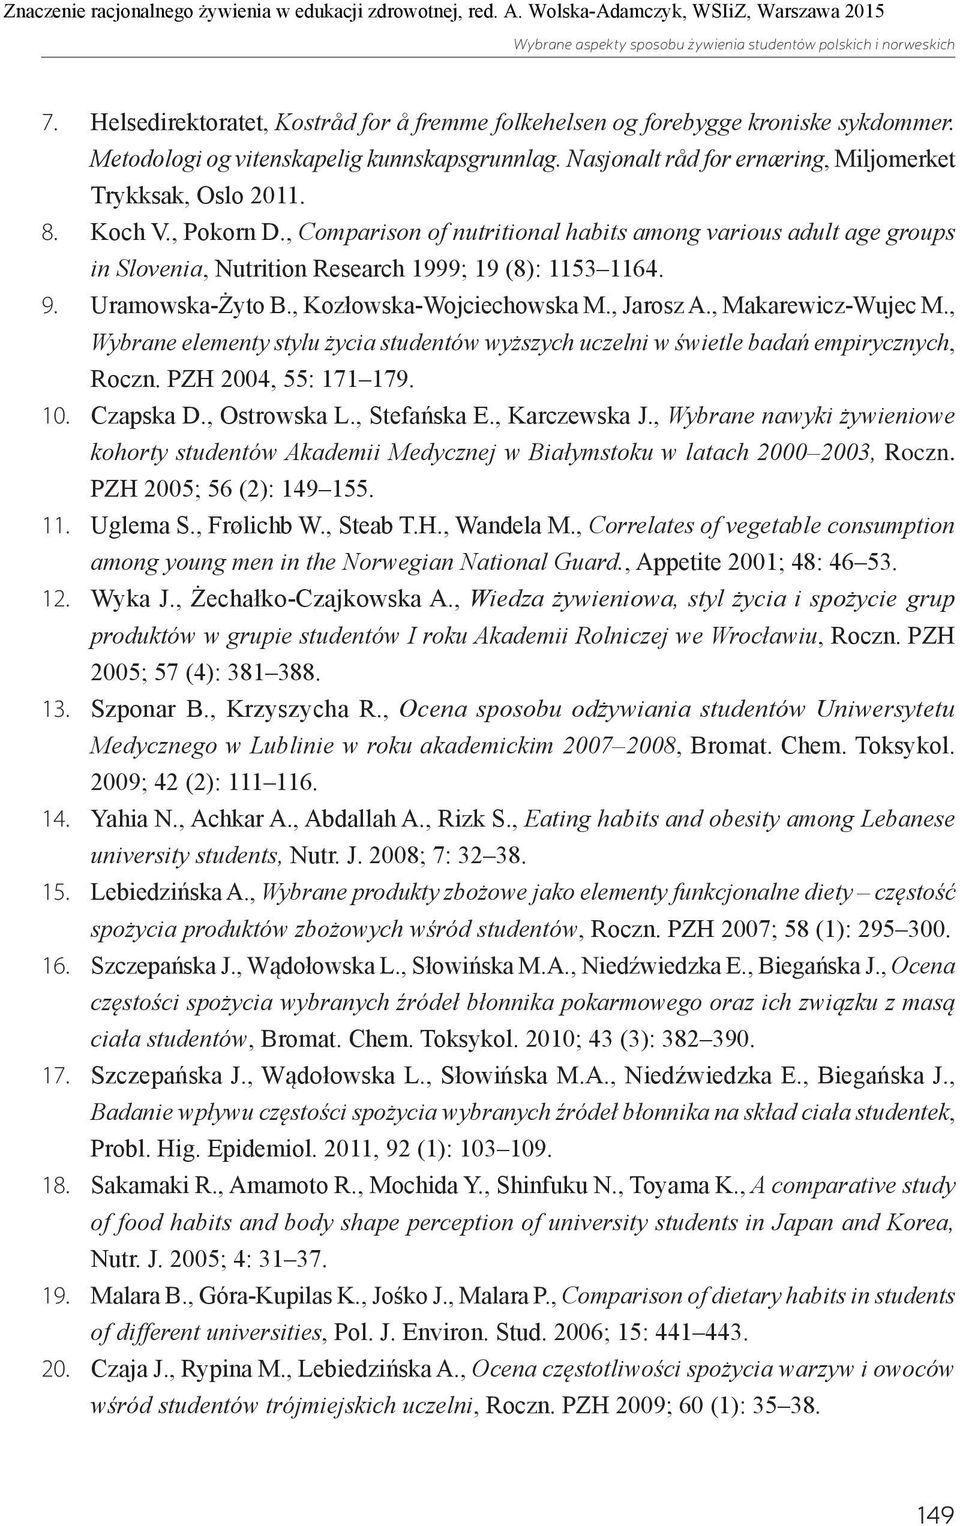 Koch V., Pokorn D., Comparison of nutritional habits among various adult age groups in Slovenia, Nutrition Research 1999; 19 (8): 1153 1164. 9. Uramowska-Żyto B., Kozłowska-Wojciechowska M., Jarosz A.